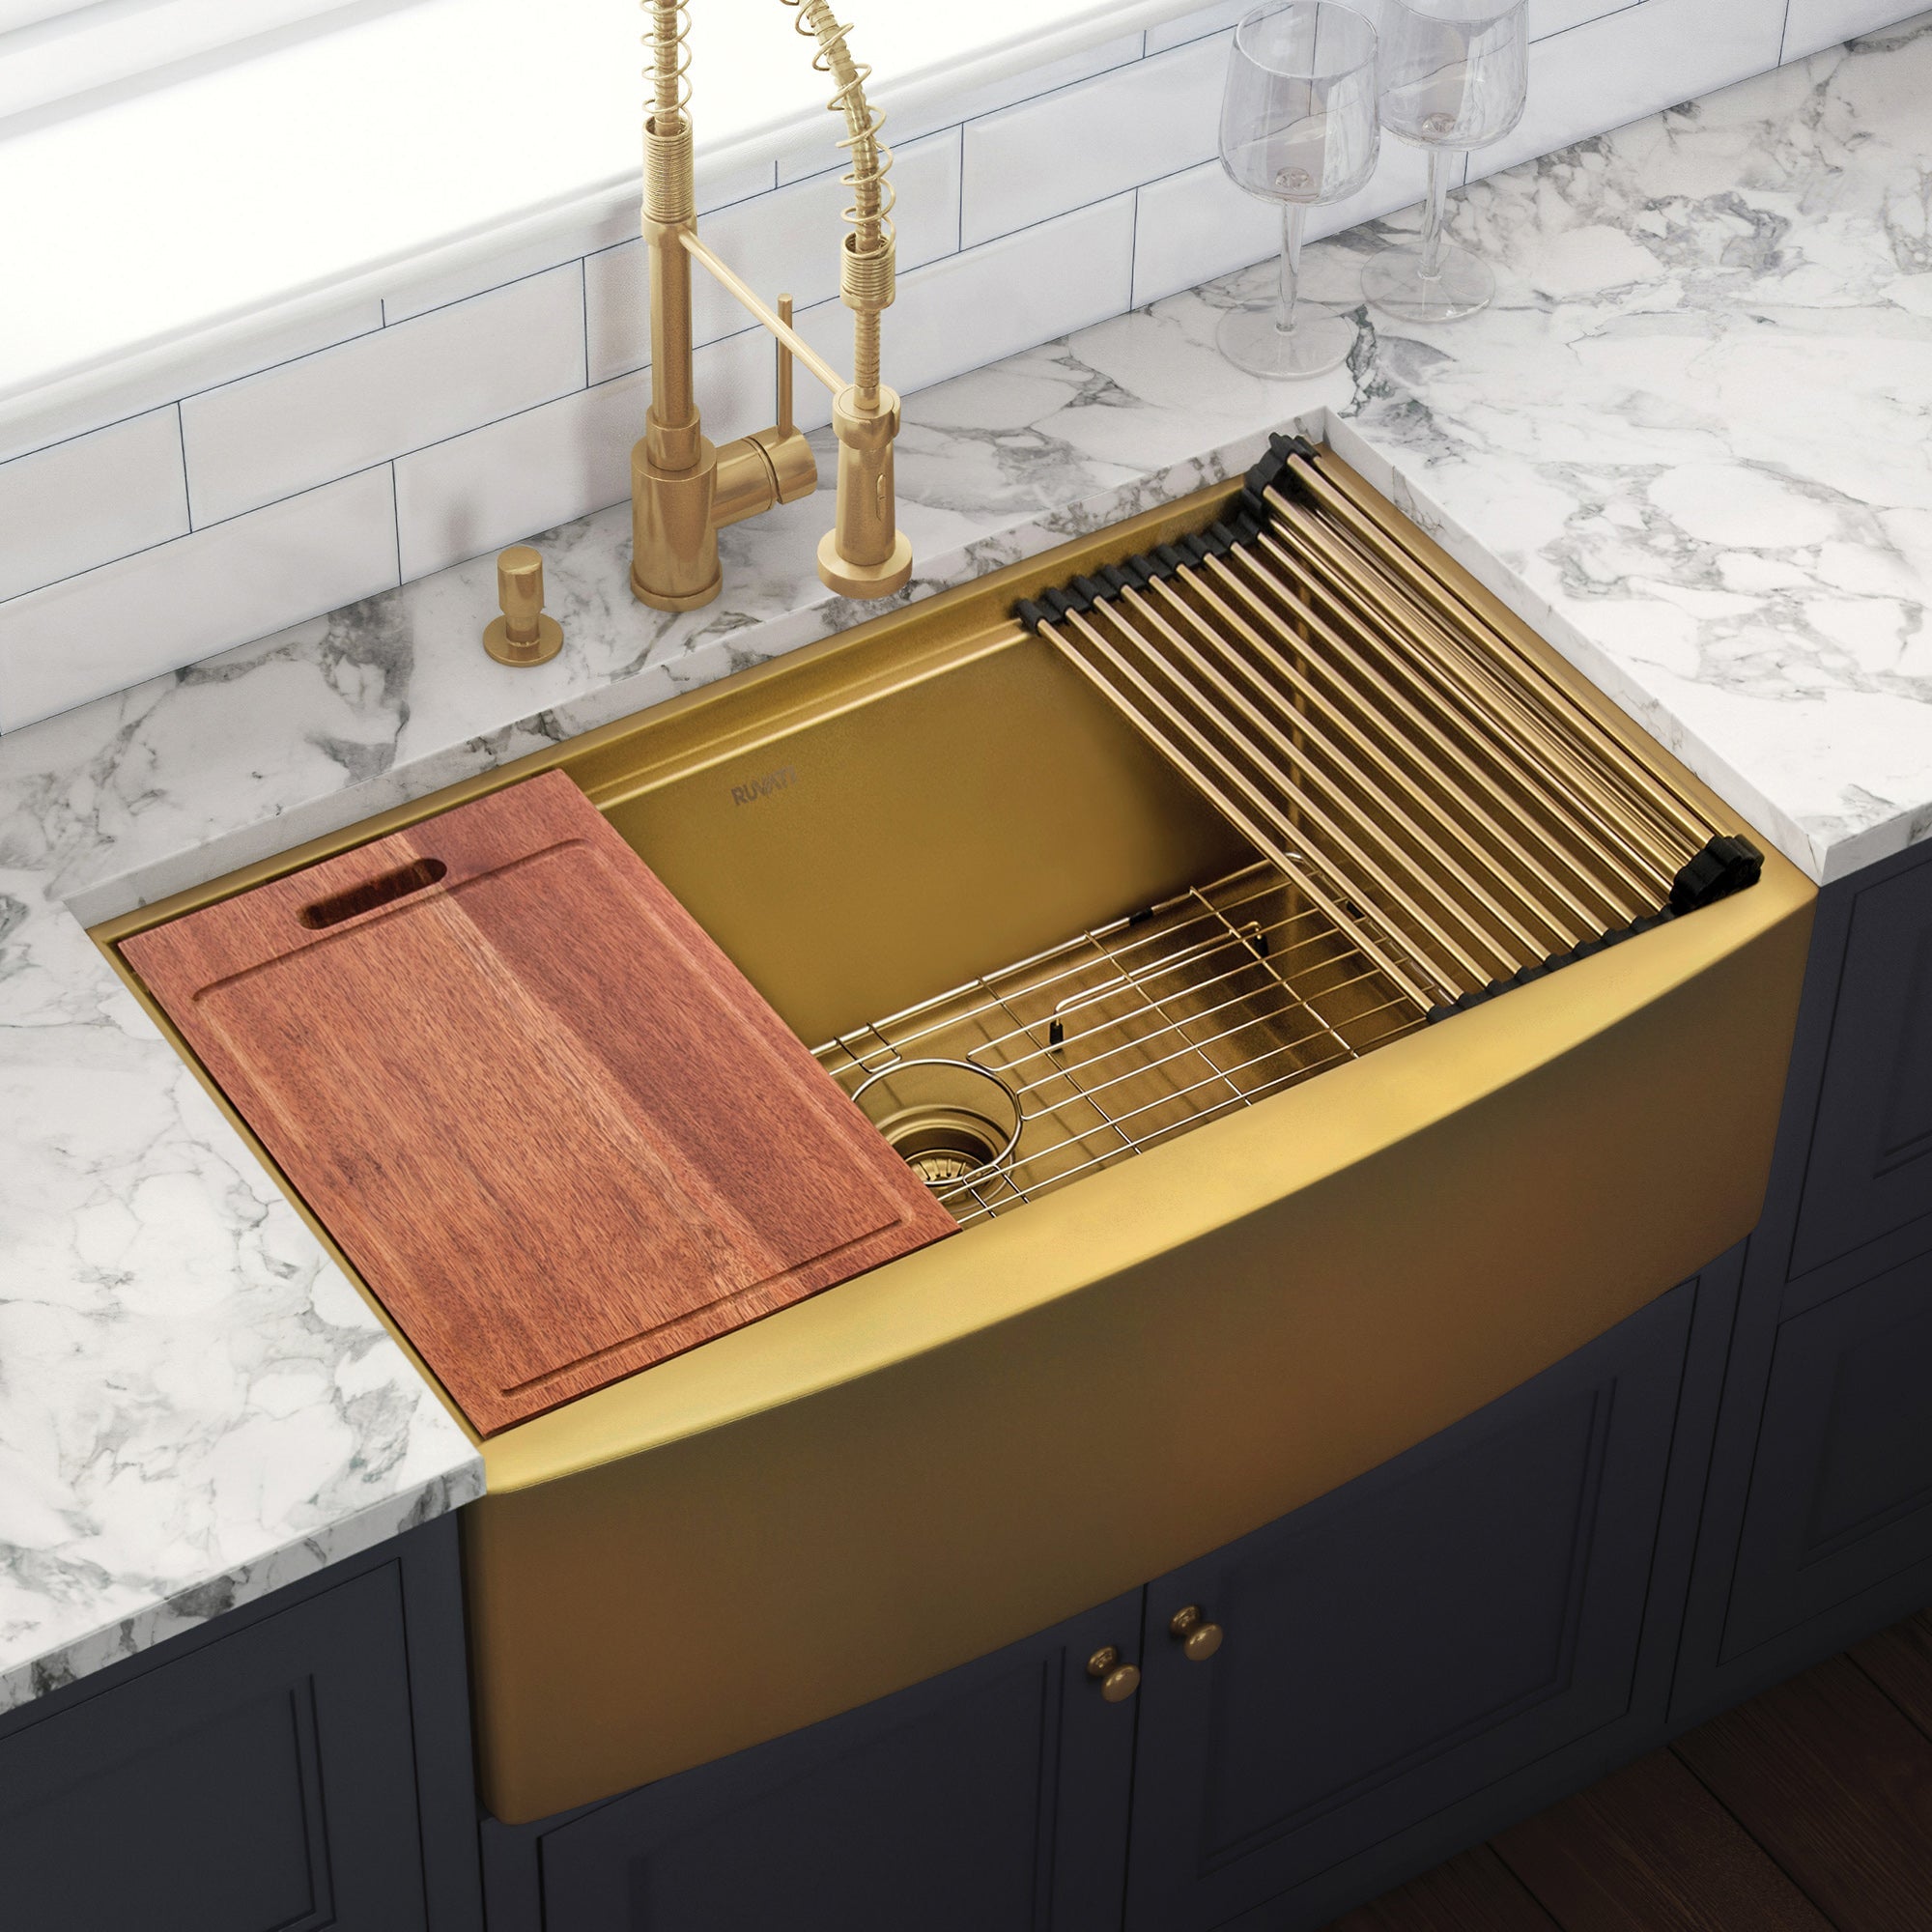 Ruvati 33" Matte Gold Workstation Apron Front Stainless Steel Kitchen Sink